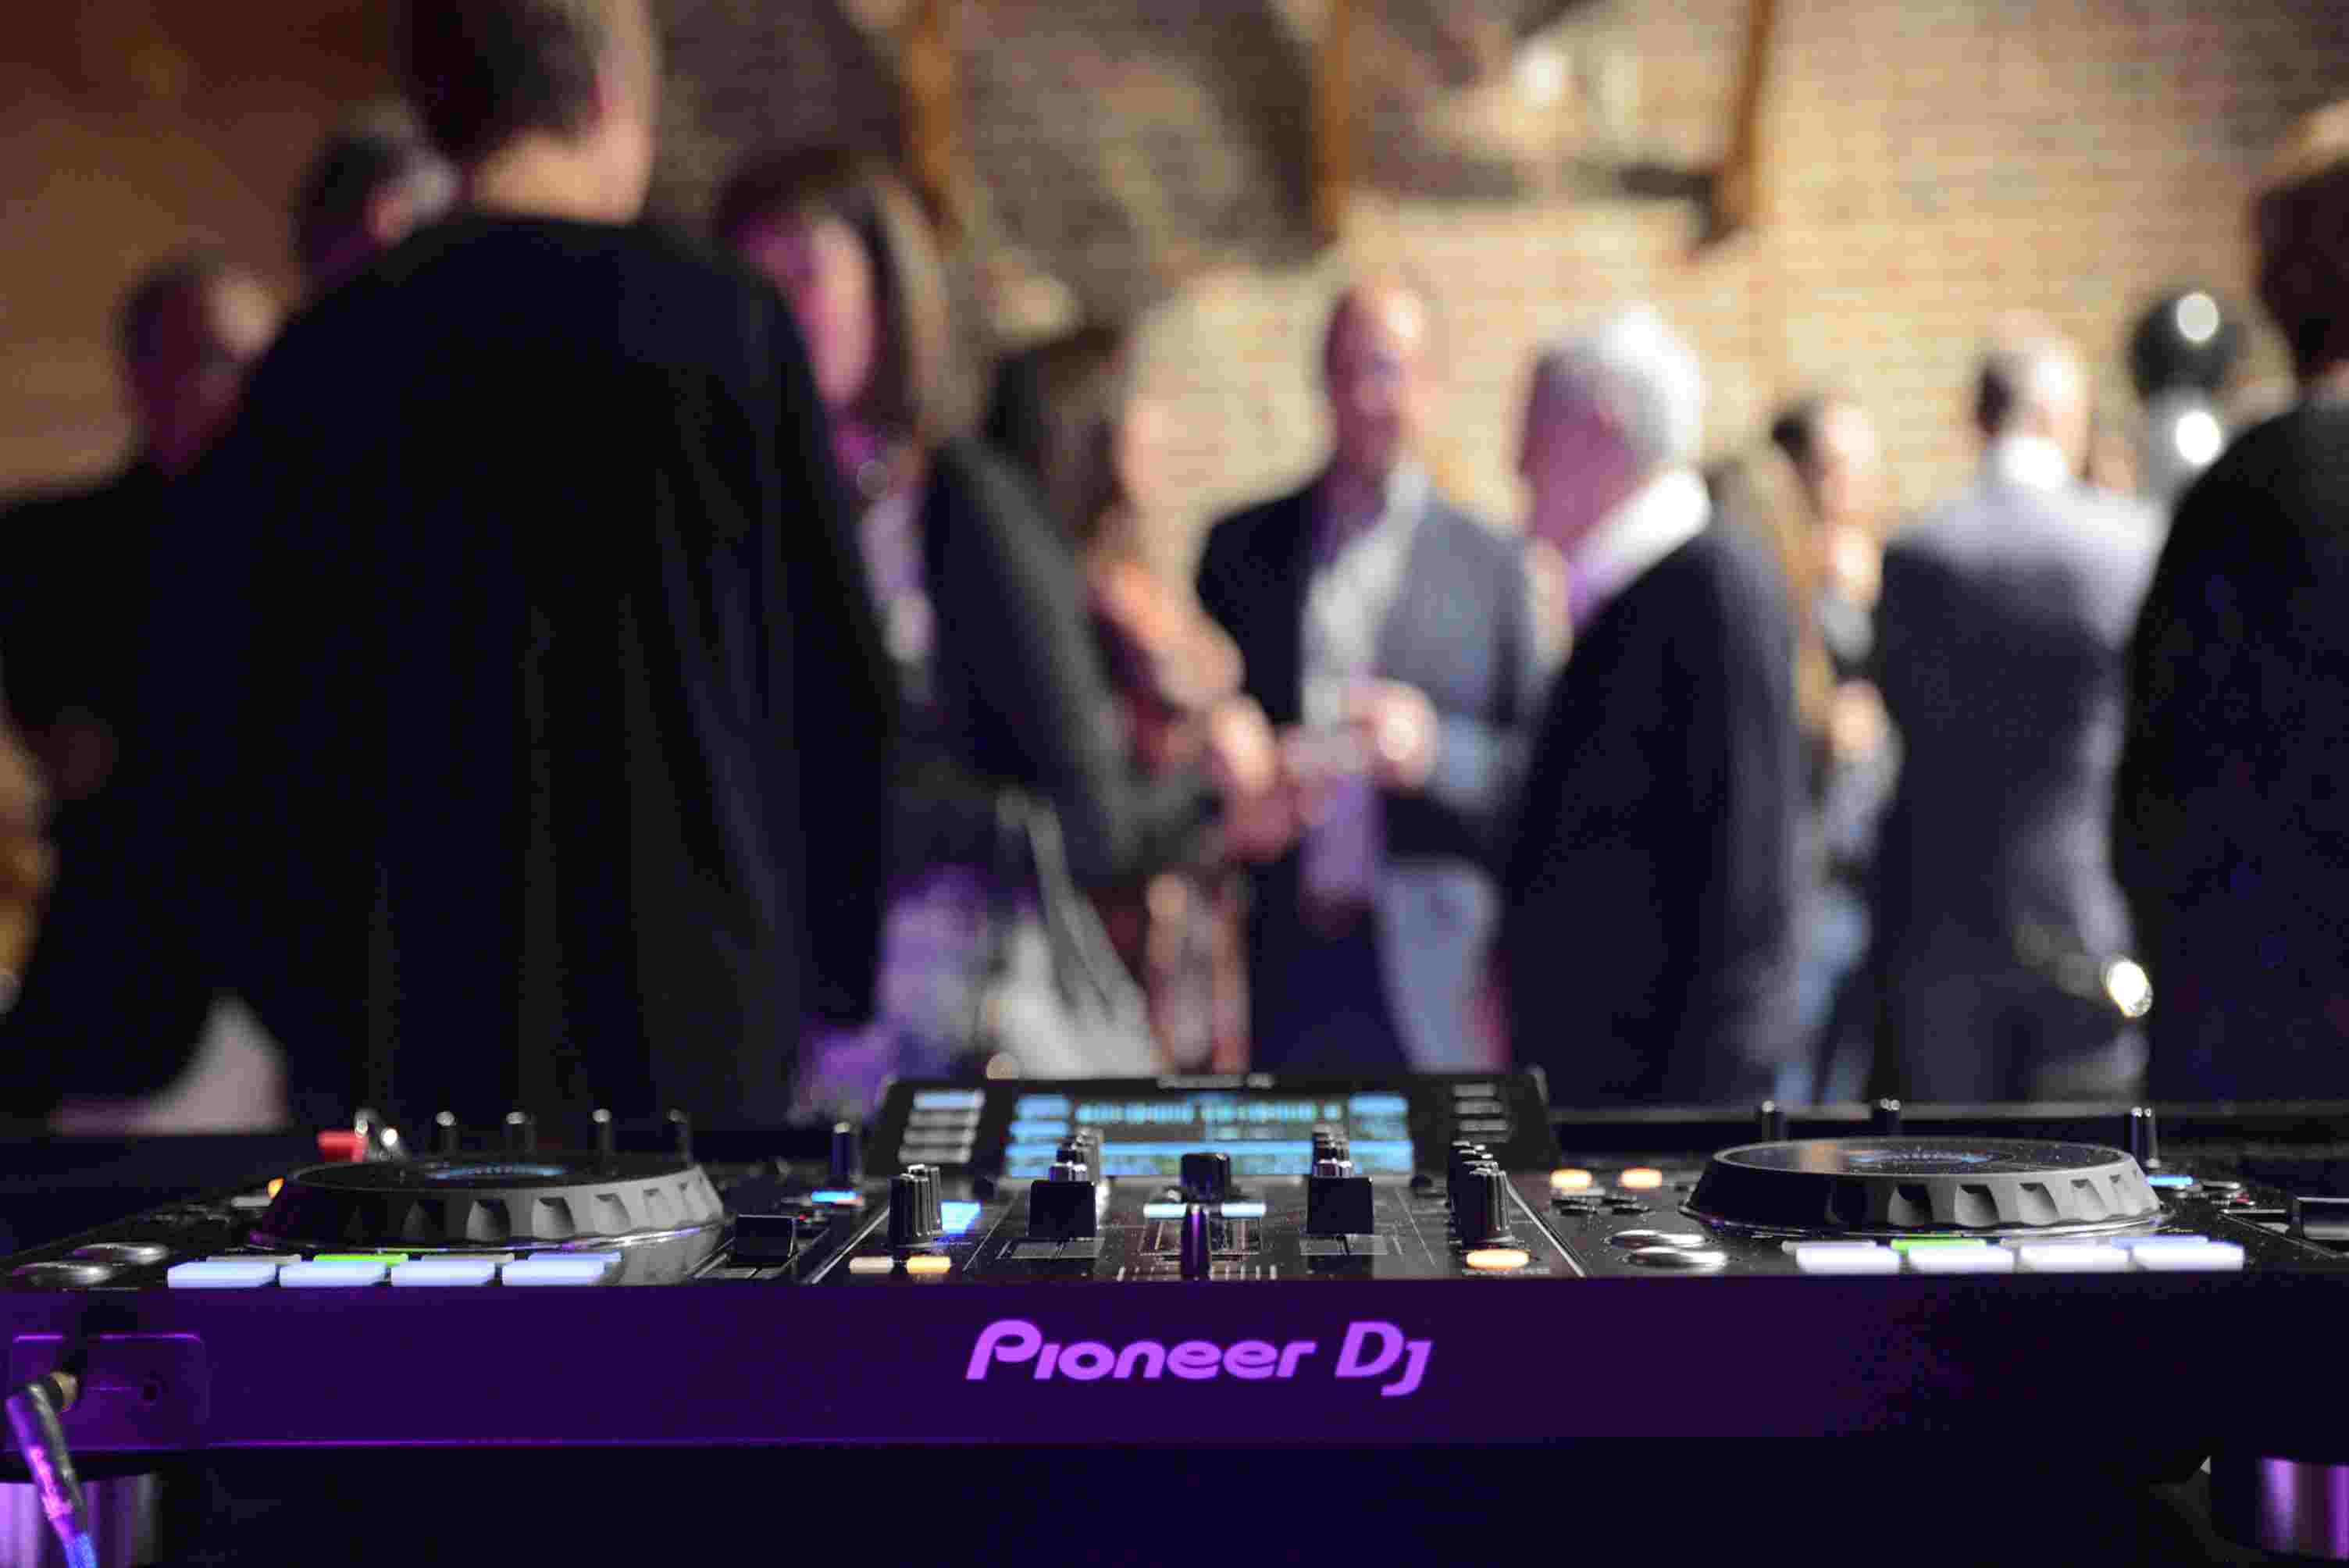 Piooner DJ Booth